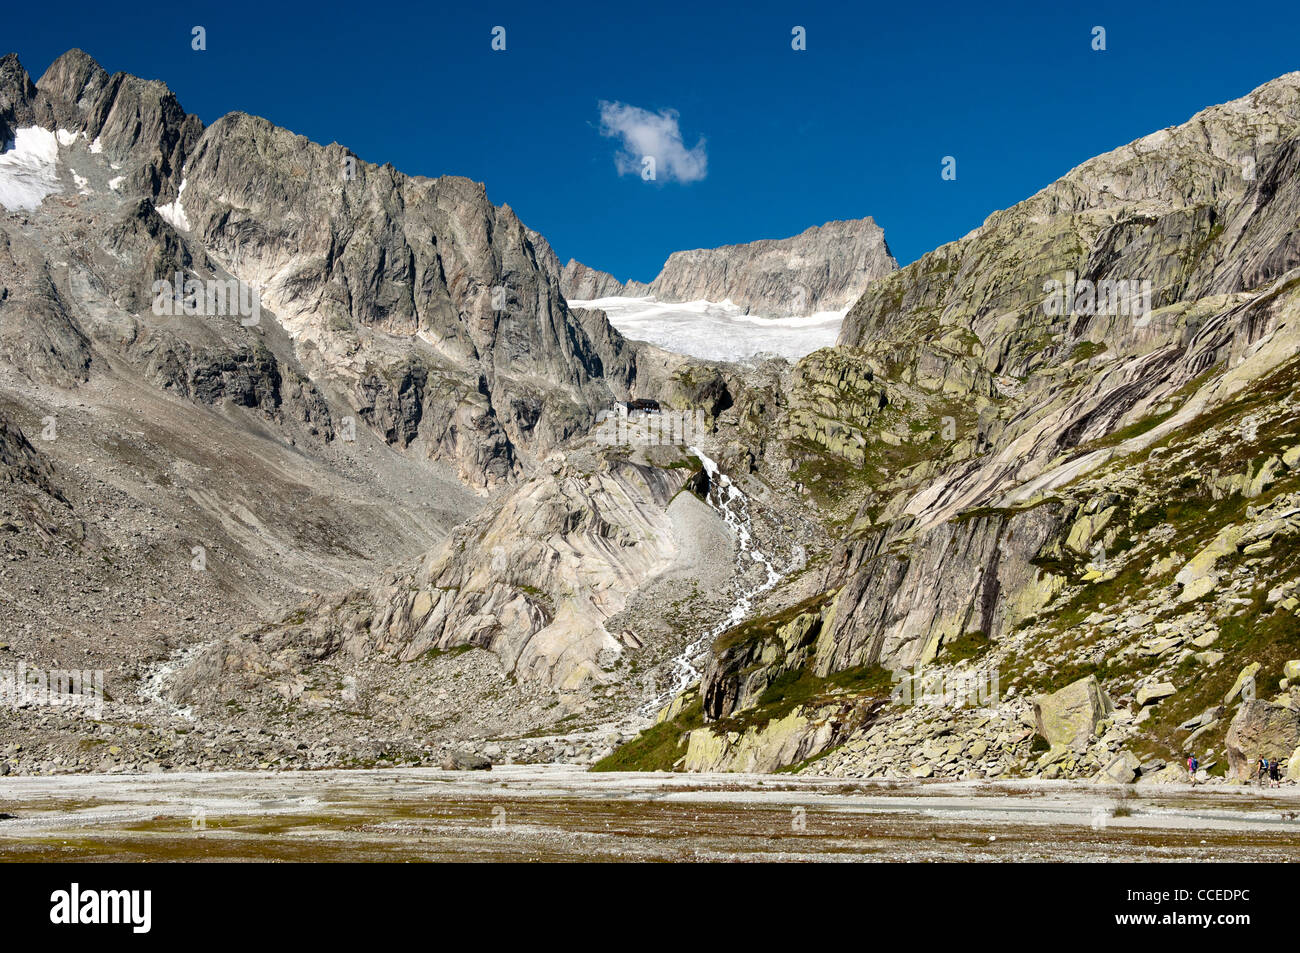 Mount Gross Diamentstock and glacier Baechligletscher, mountain refuge Baechlitalhuette in foreground, Bernese Alps, Switzerland Stock Photo